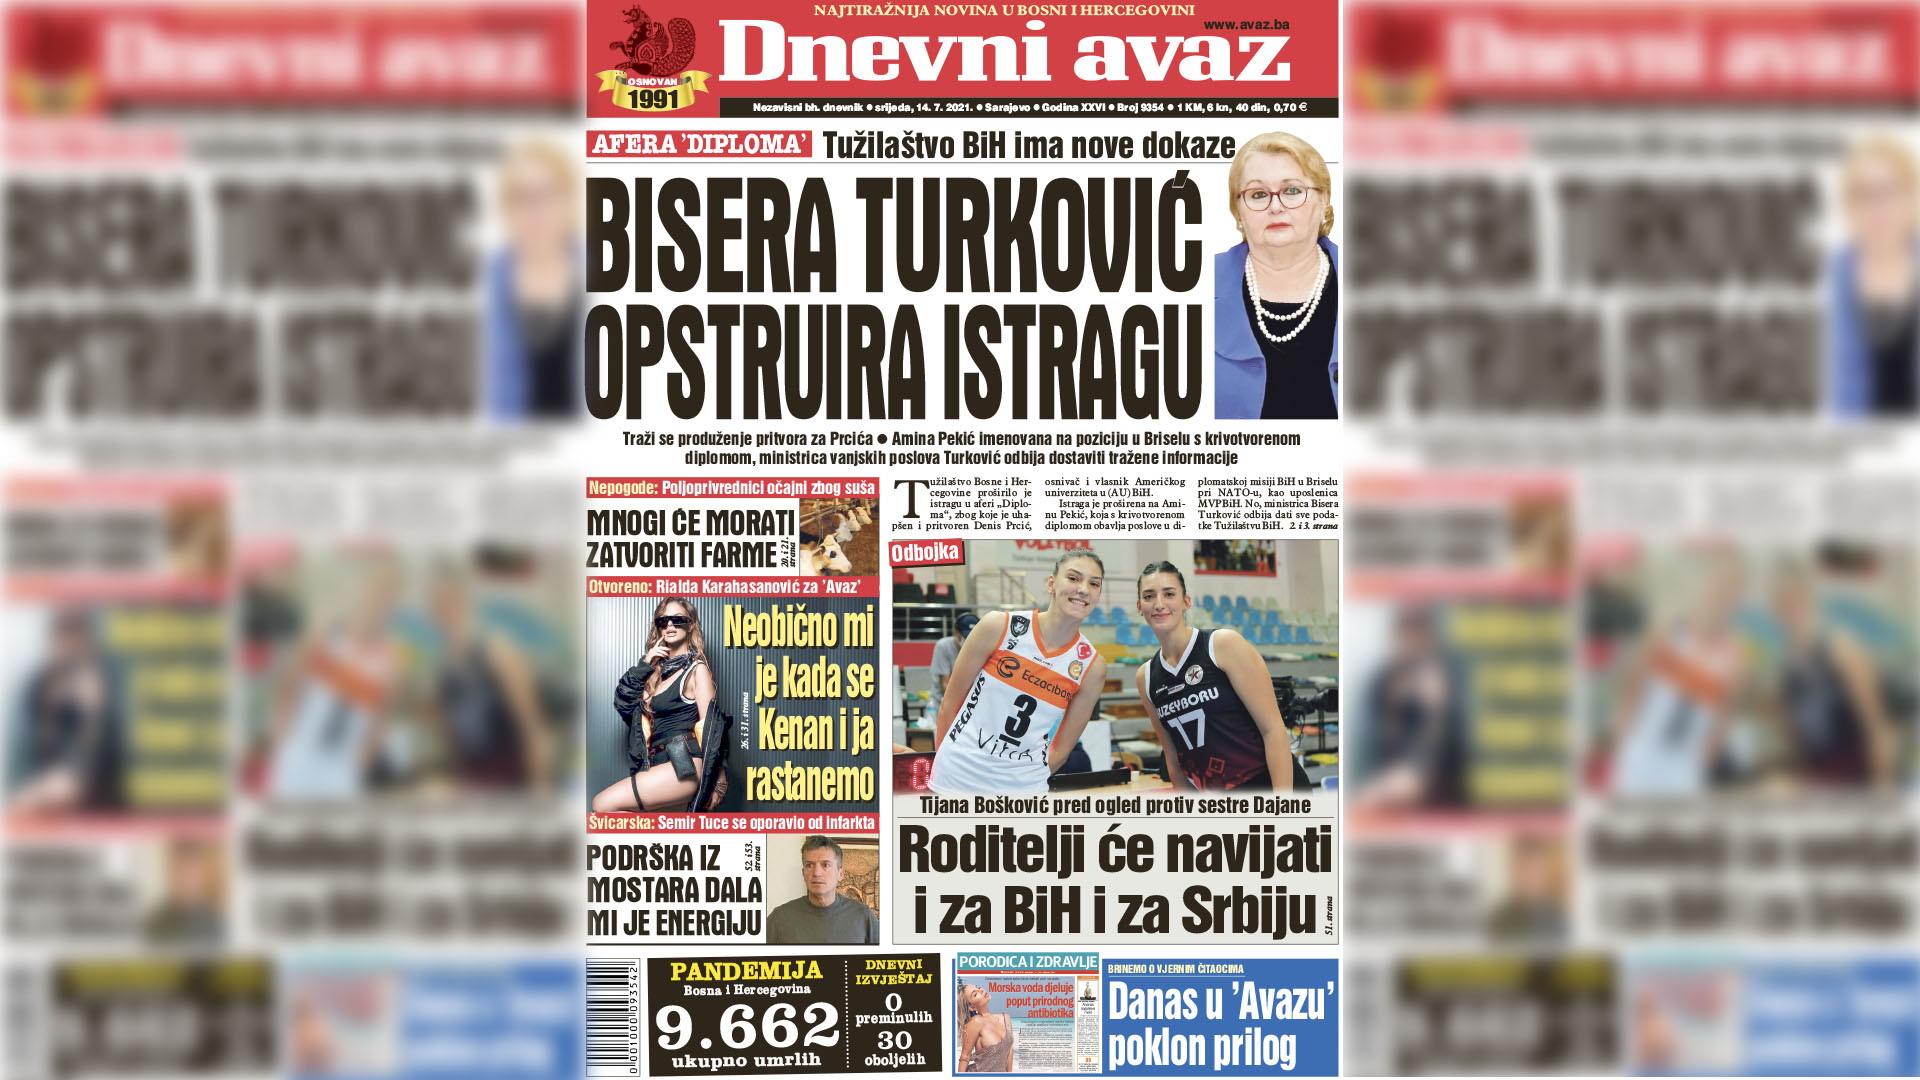 Bisera Turković opstruira istragu